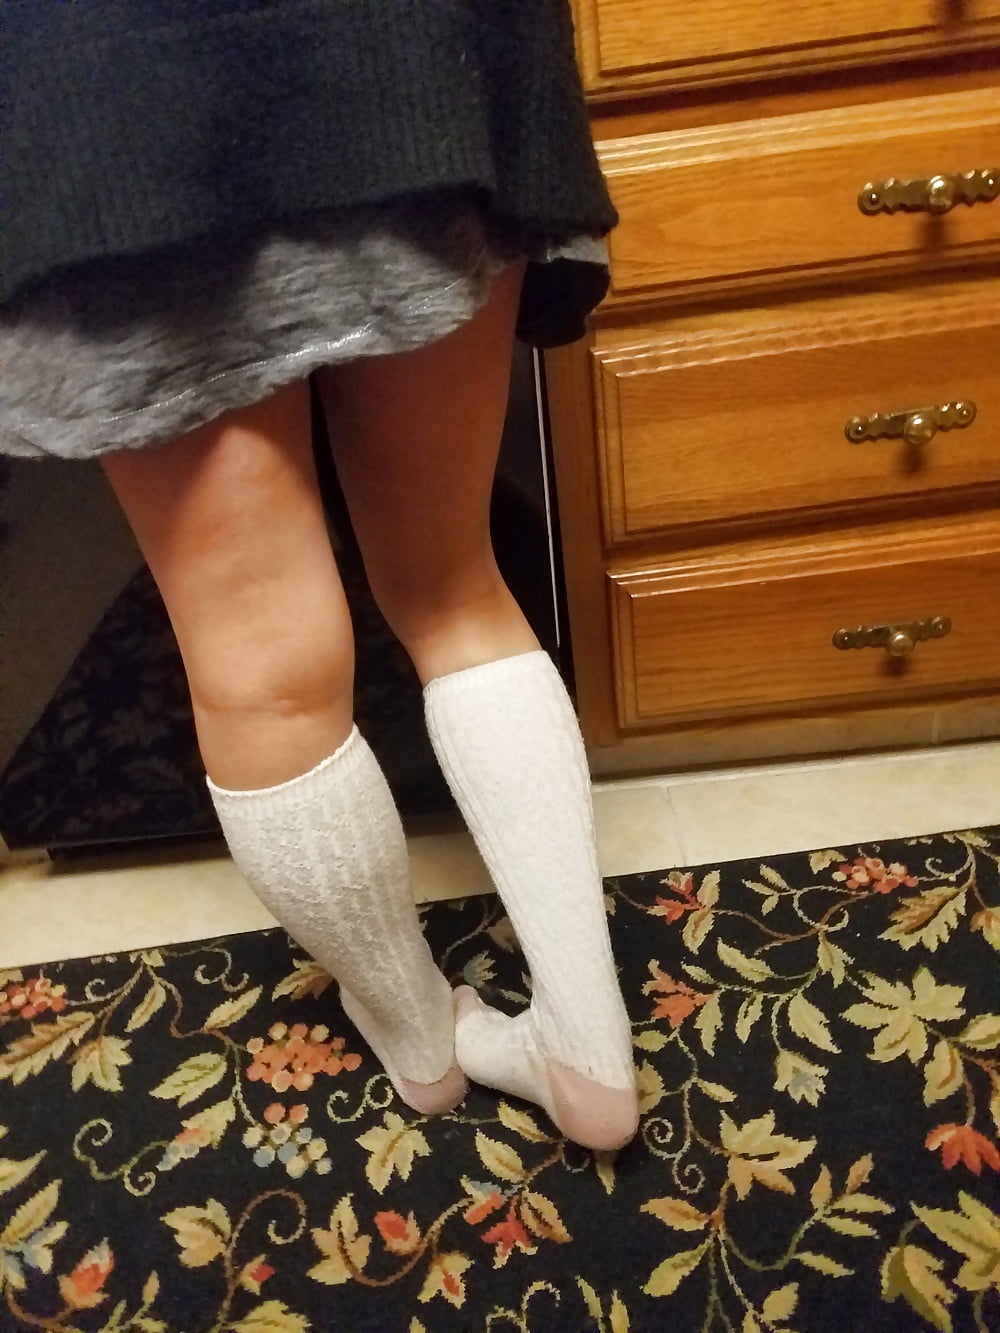 Wife unaware socks and upskirt adult photos